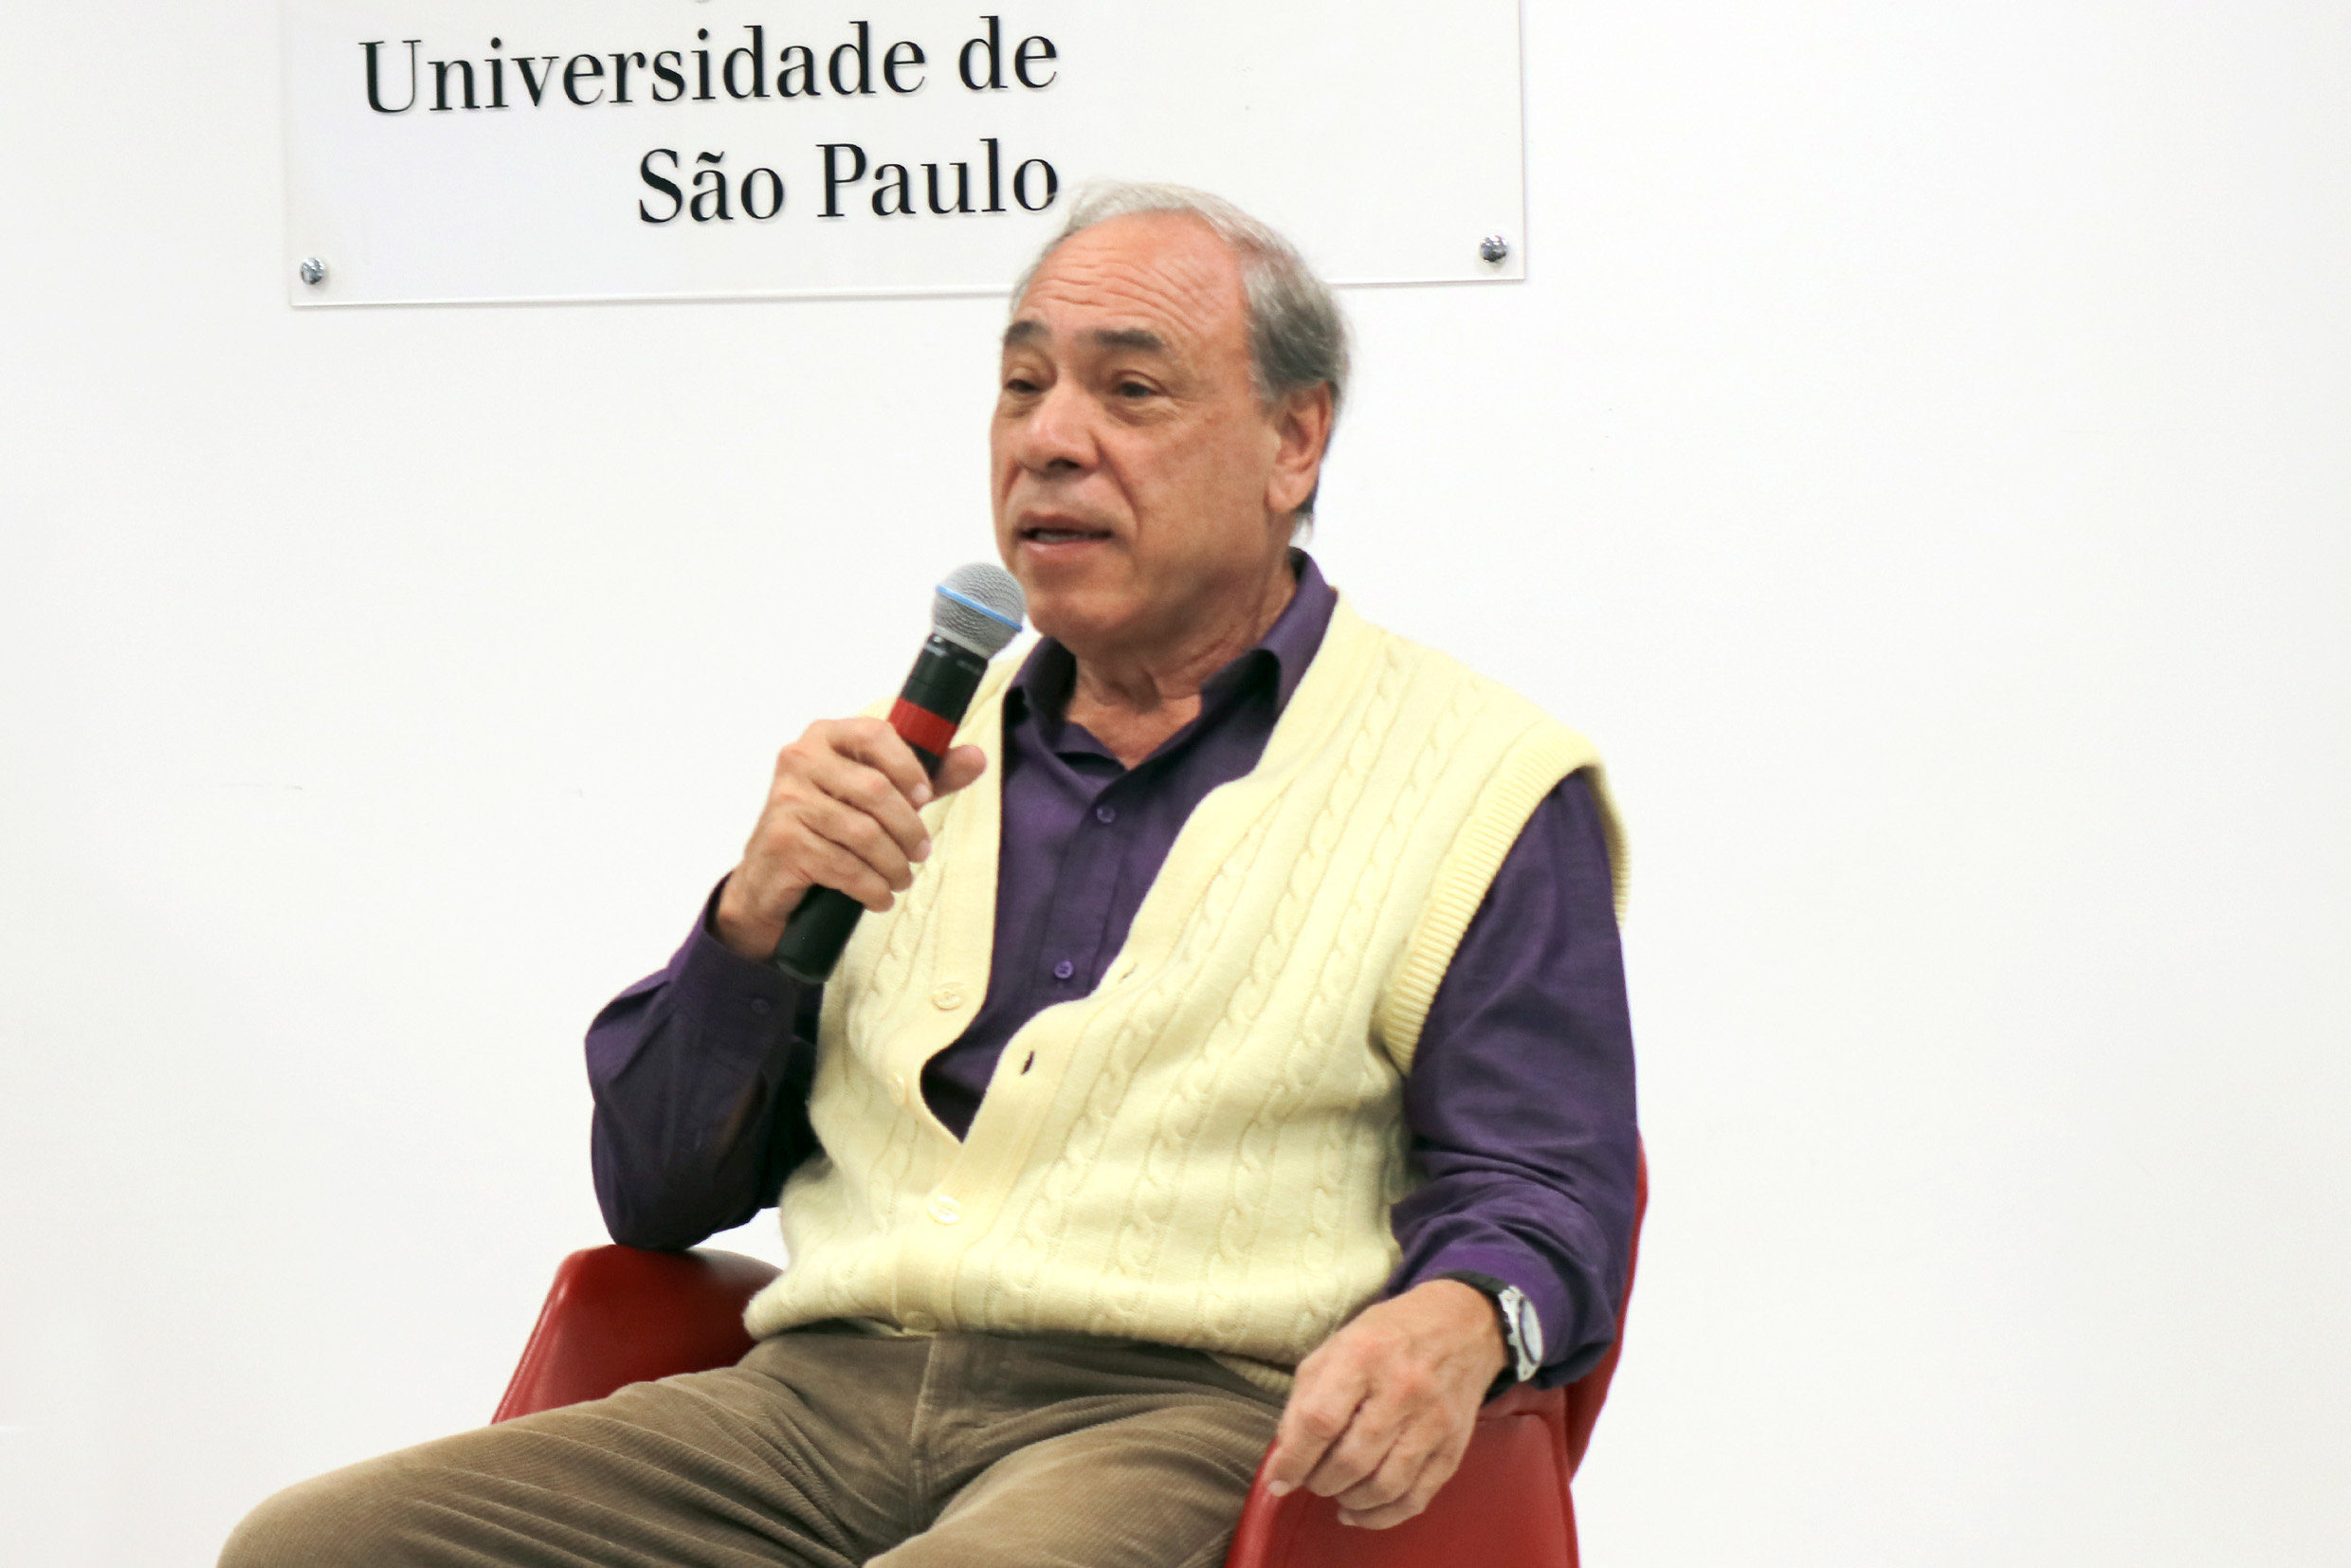 Gildo Magalhães dos Santos abre o evento e apresenta o expositor